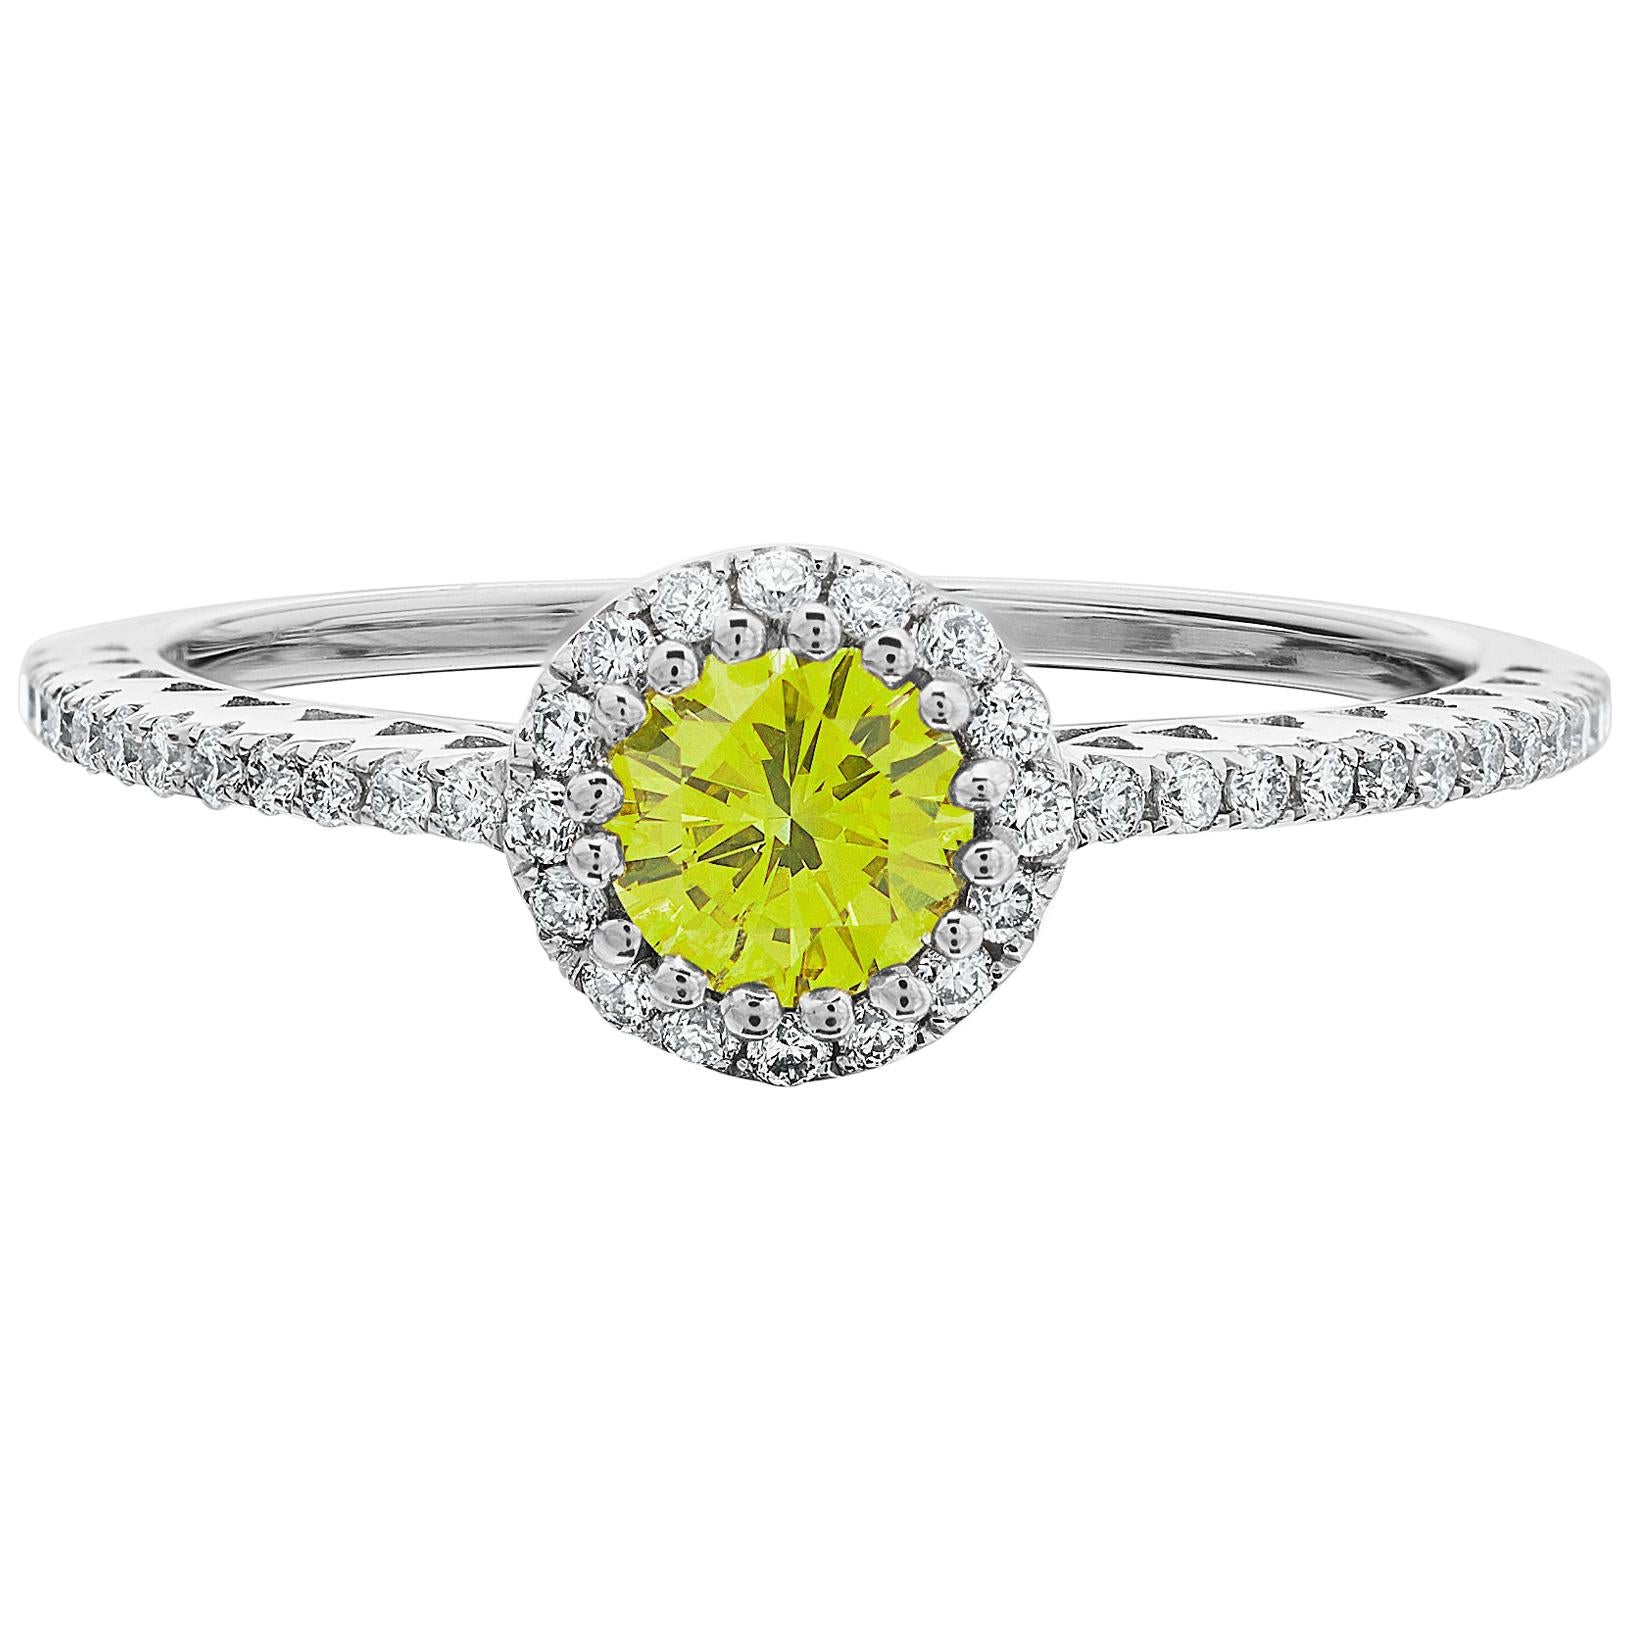 Fancy Vivid Yellow 0.36ct & White Round Brilliant Cut Diamond Cluster Ring